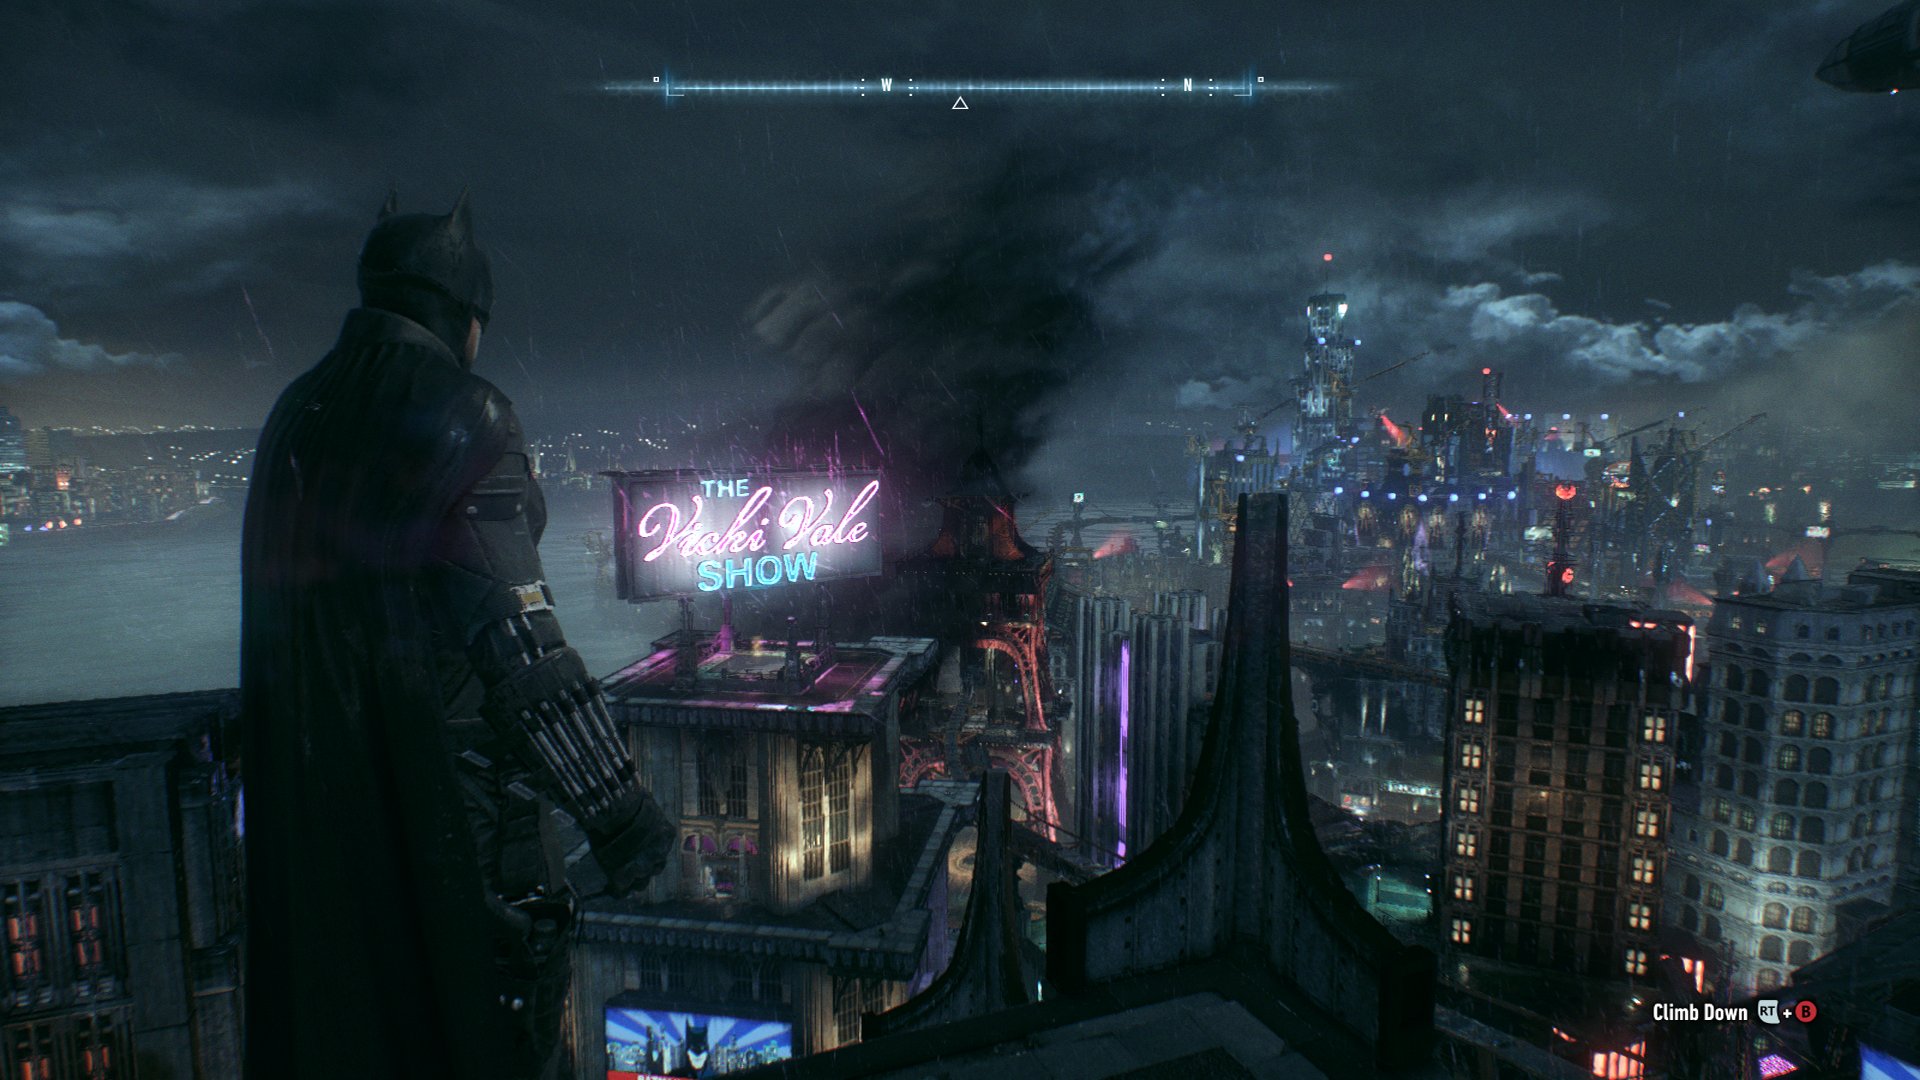 В Batman Arkham Knight на Xbox добавили новый контент, игра доступна в Game Pass: с сайта NEWXBOXONE.RU